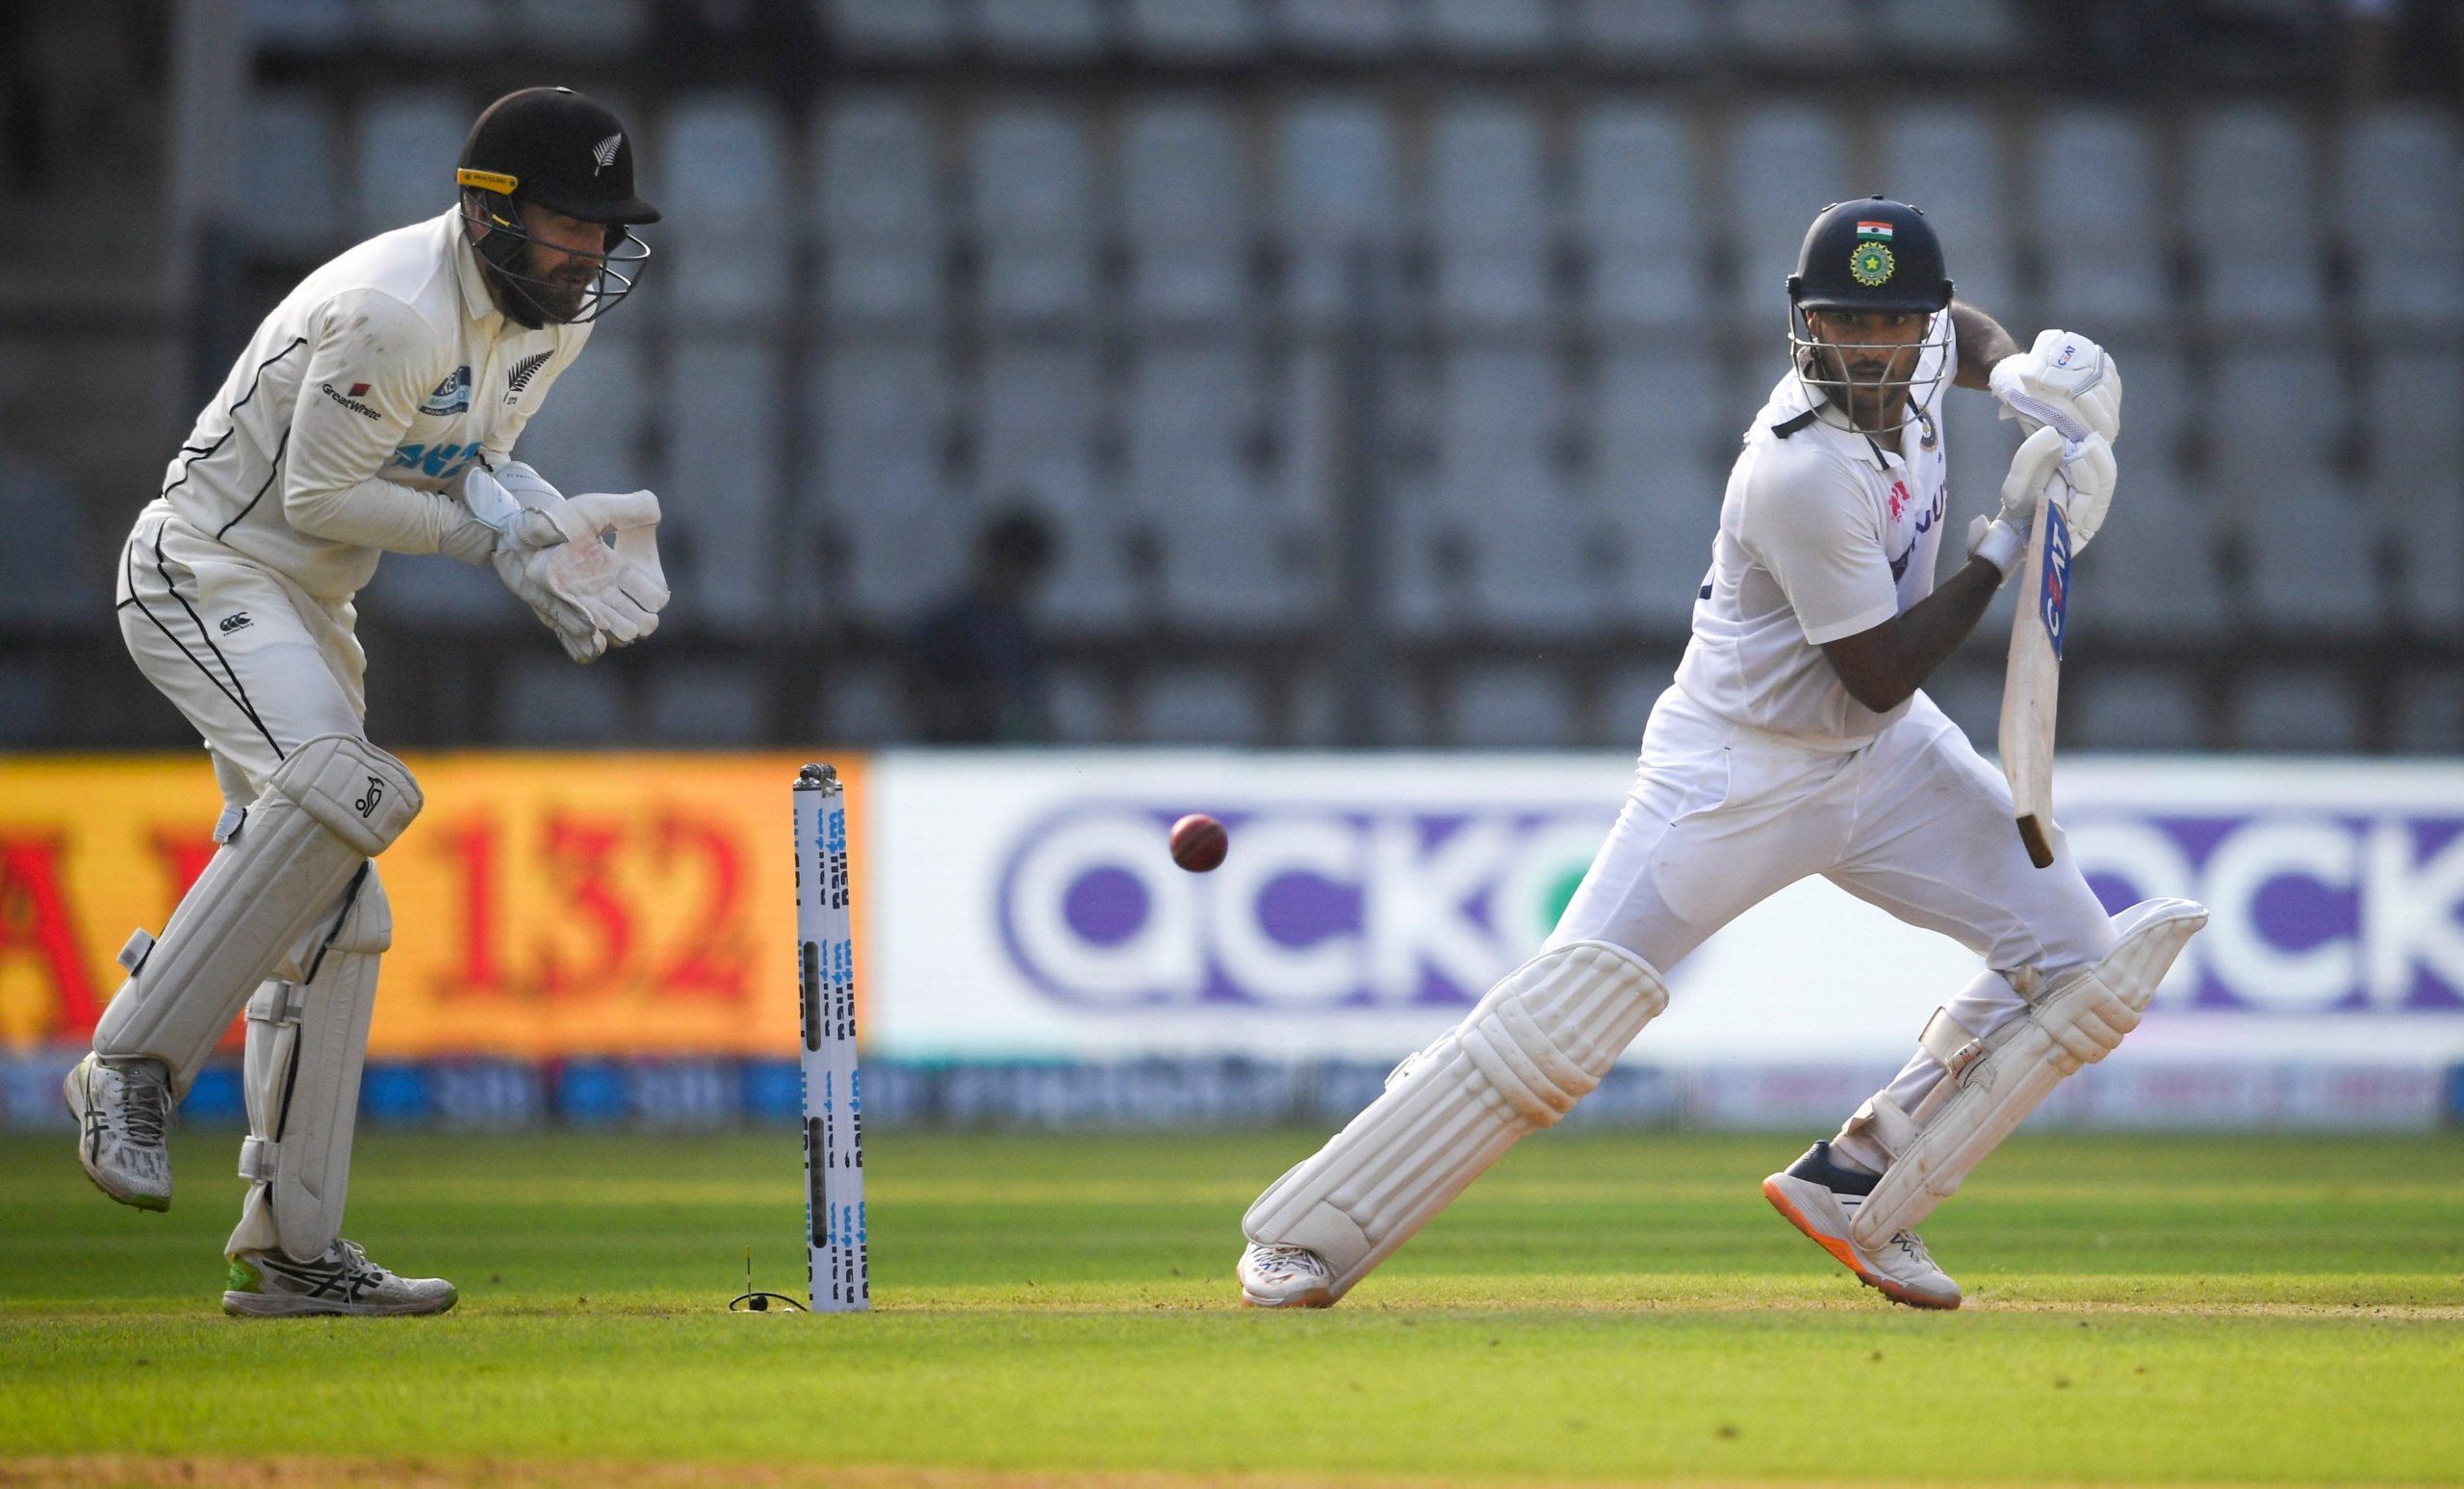 India in dominating position in 2nd Test vs New Zealand: Sachin Tendulkar